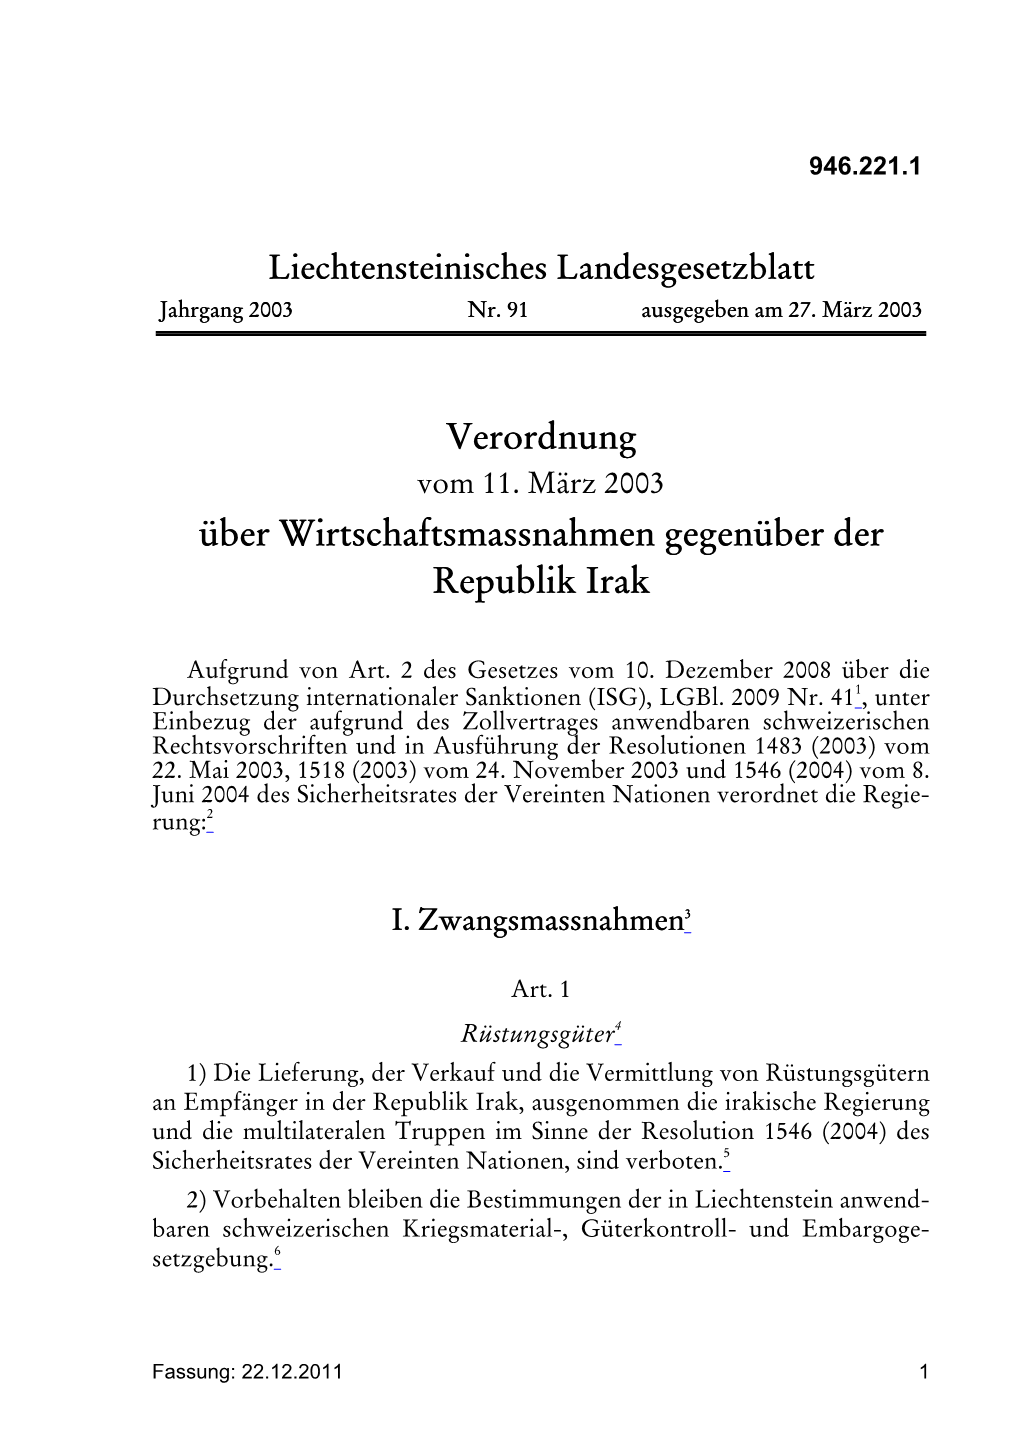 Liechtensteinisches Landesgesetzblatt Jahrgang 2003 Nr